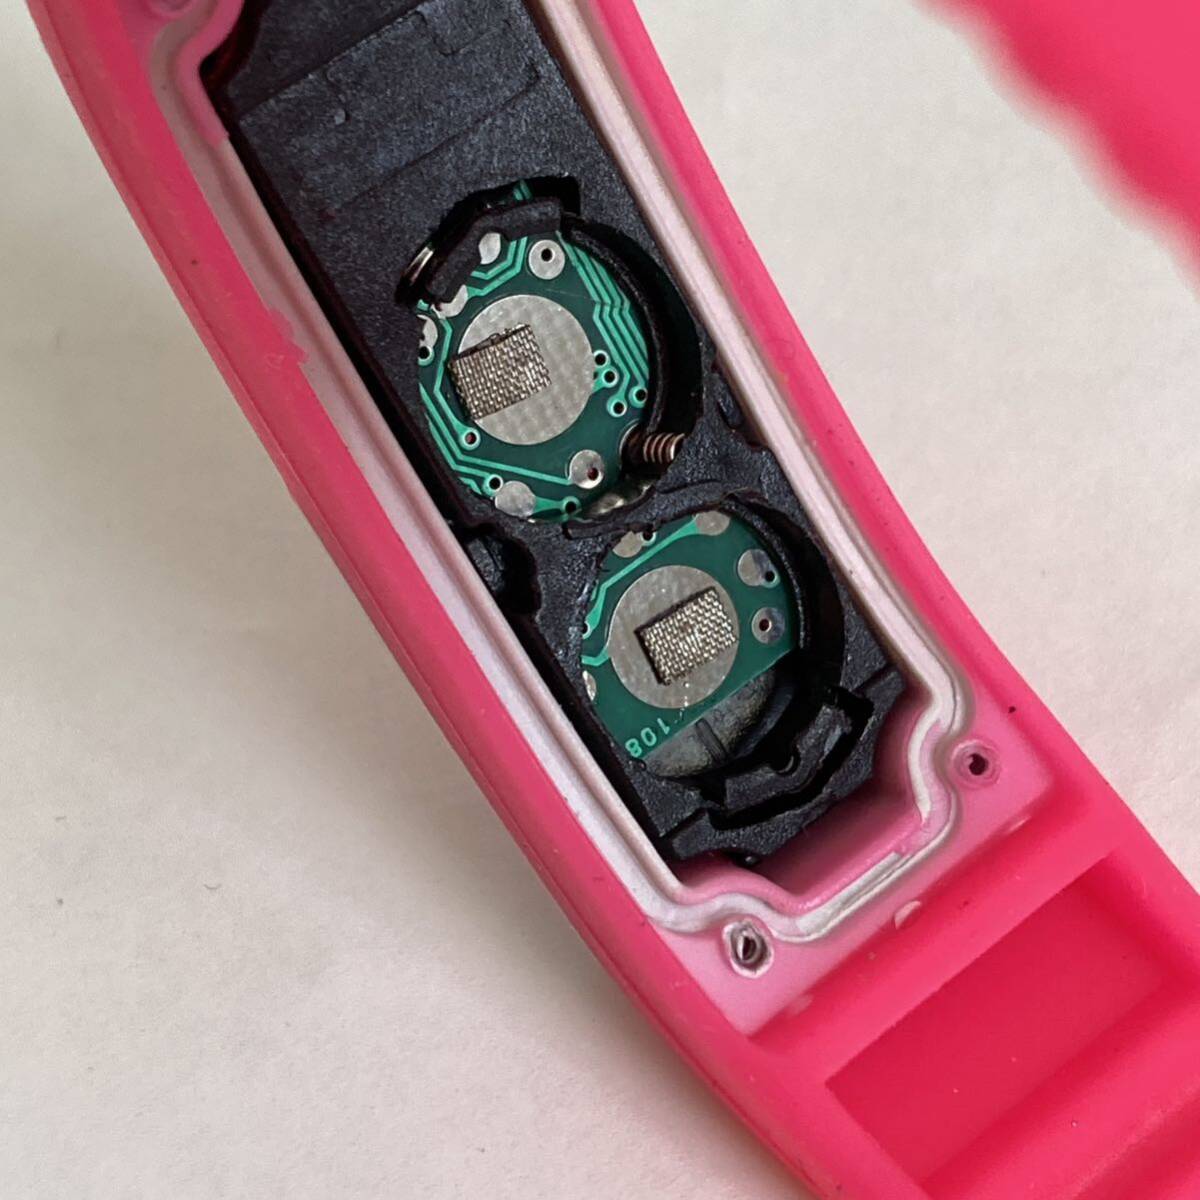  Raver цифровой наручные часы утиль зеленый розовый 2 шт. комплект батарейка нет ржавчина есть 